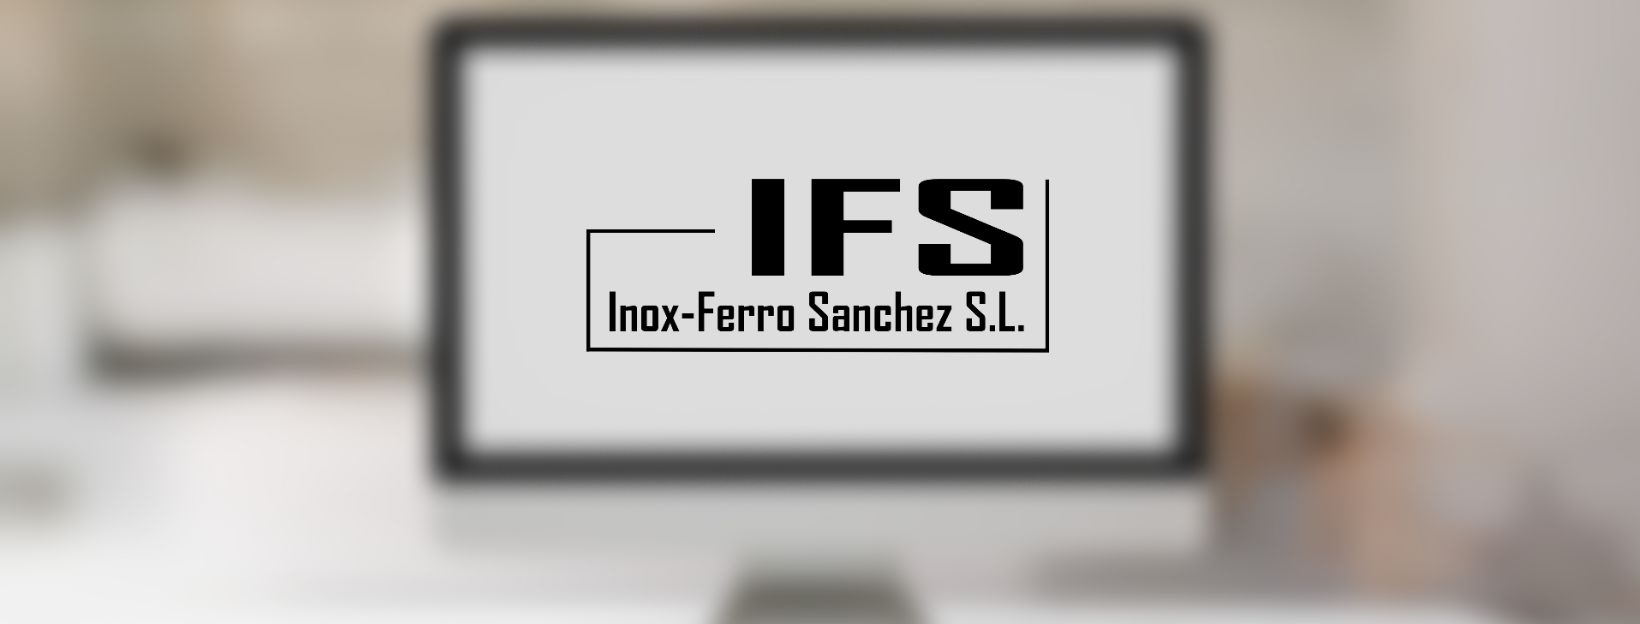 Pagina web para Inox-Ferro Sanchez s.l